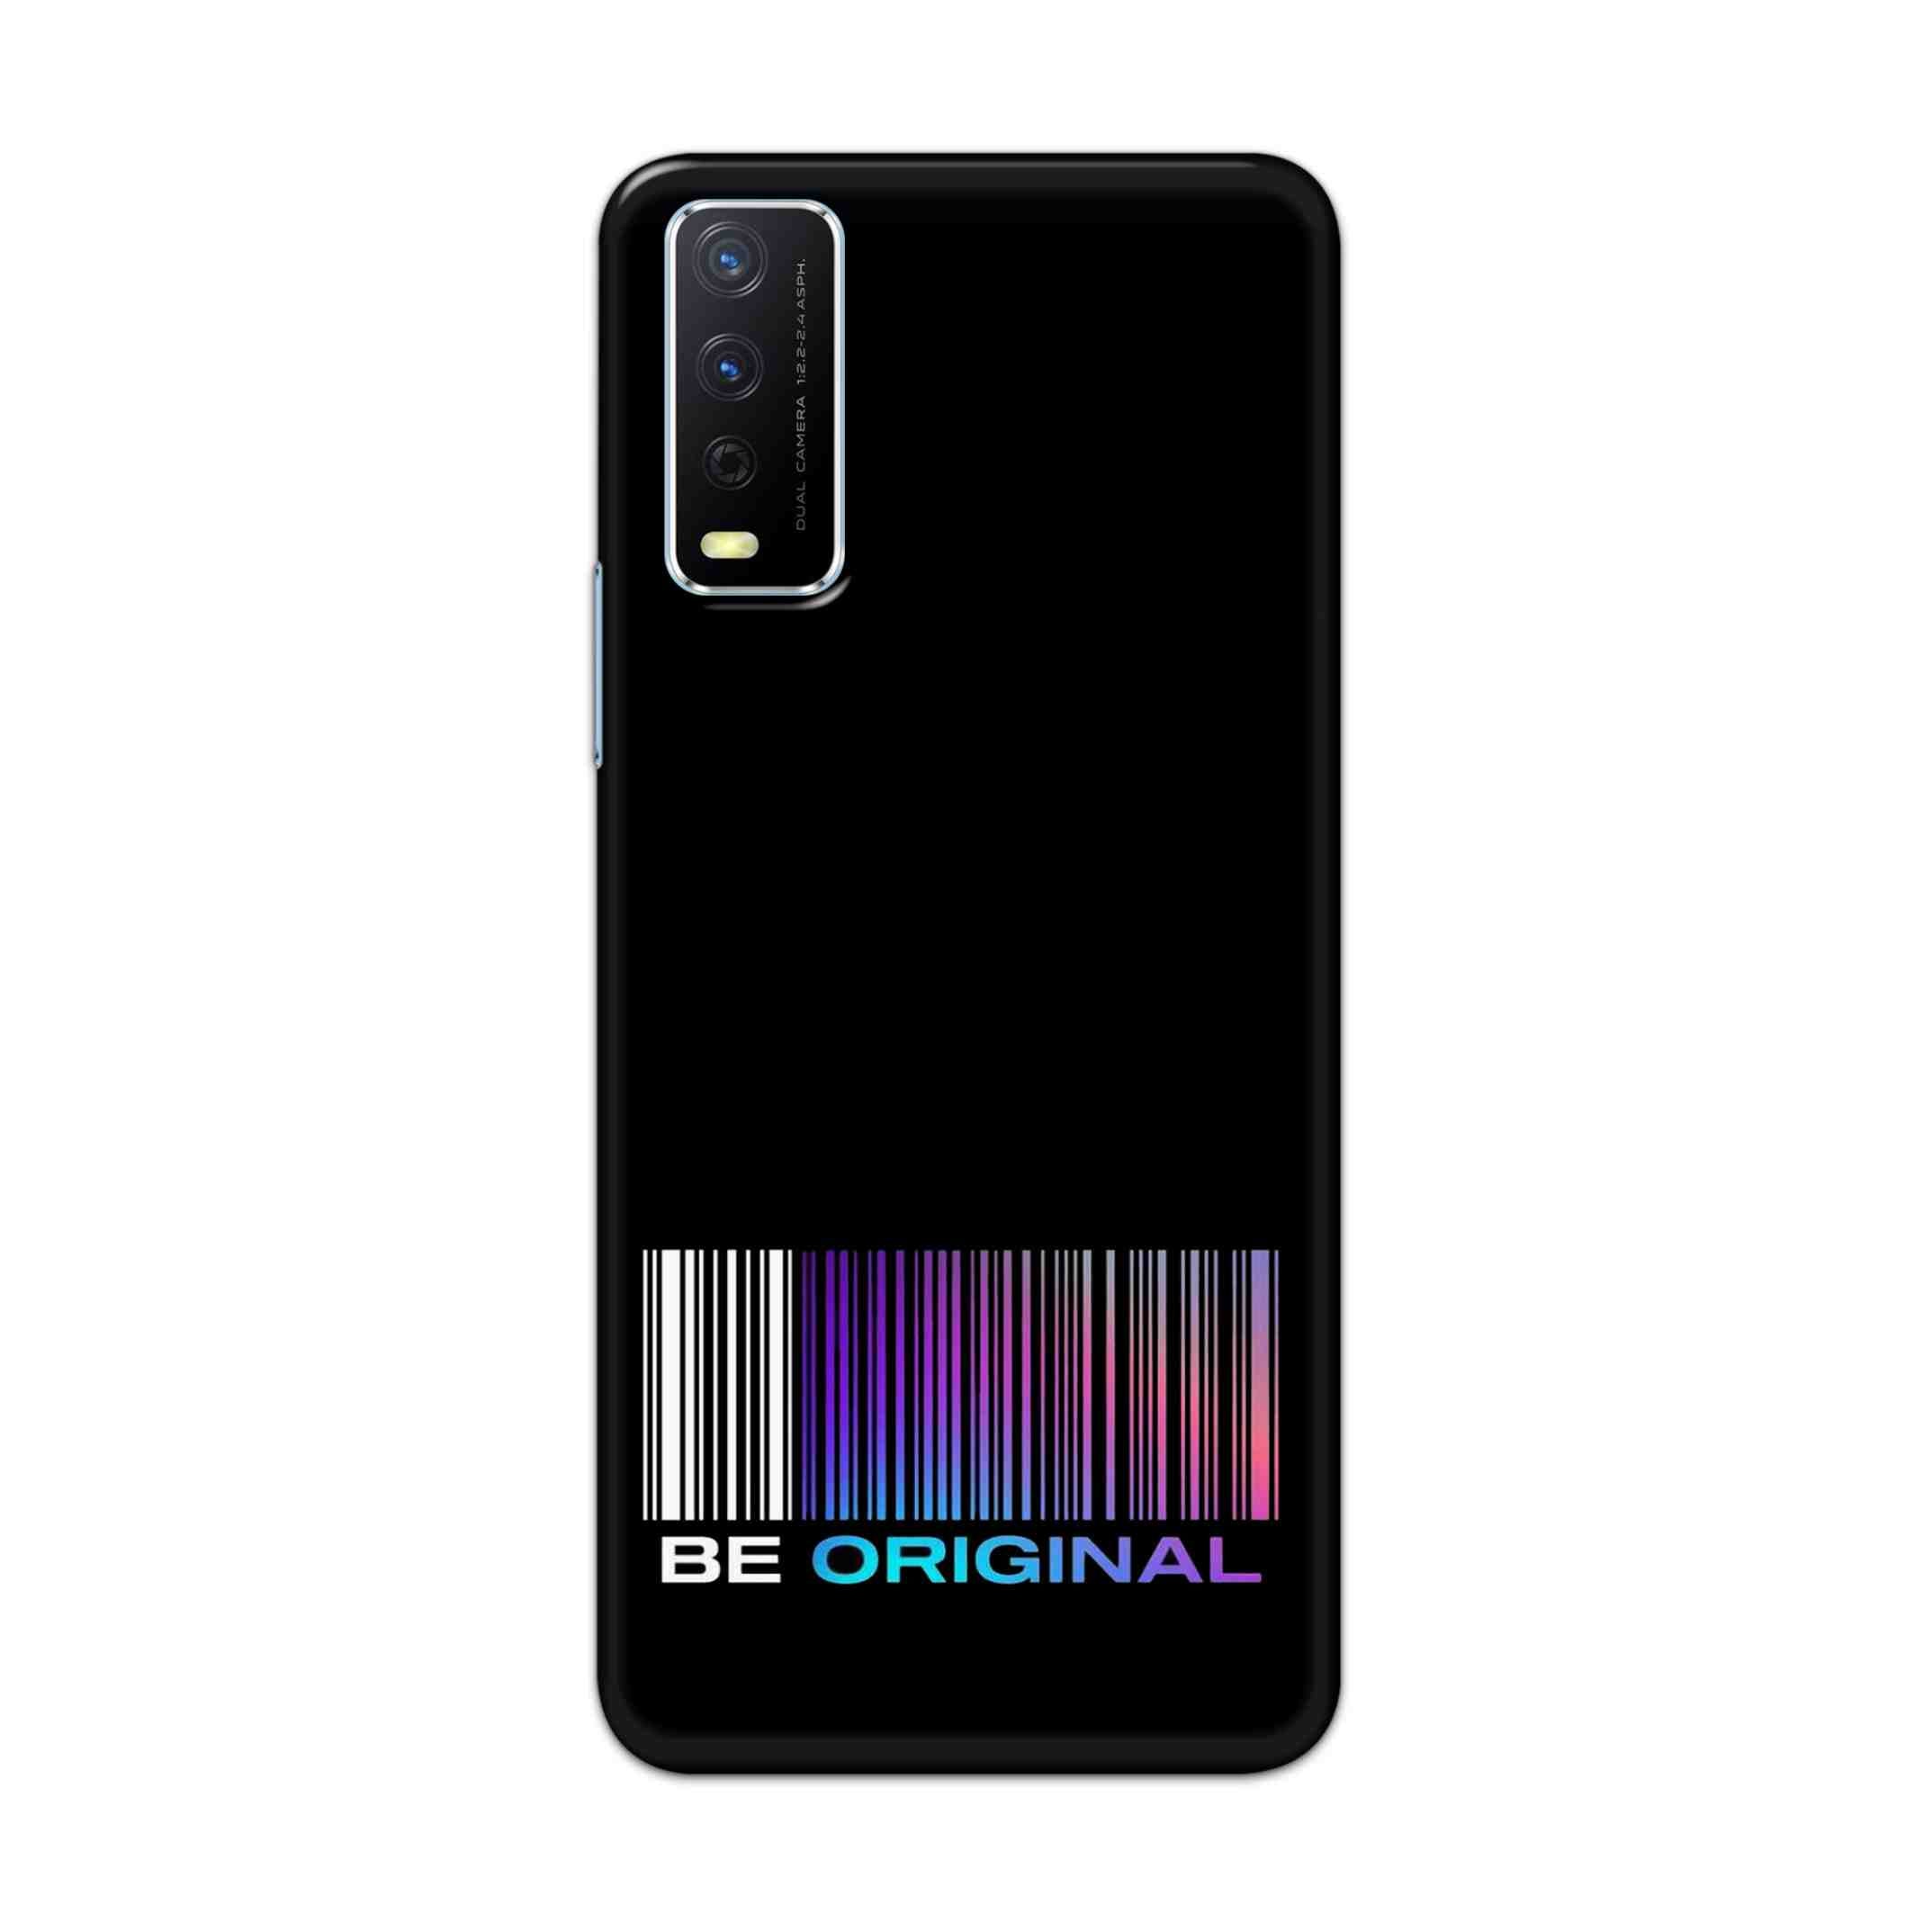 Buy Be Original Hard Back Mobile Phone Case Cover For Vivo Y12s Online